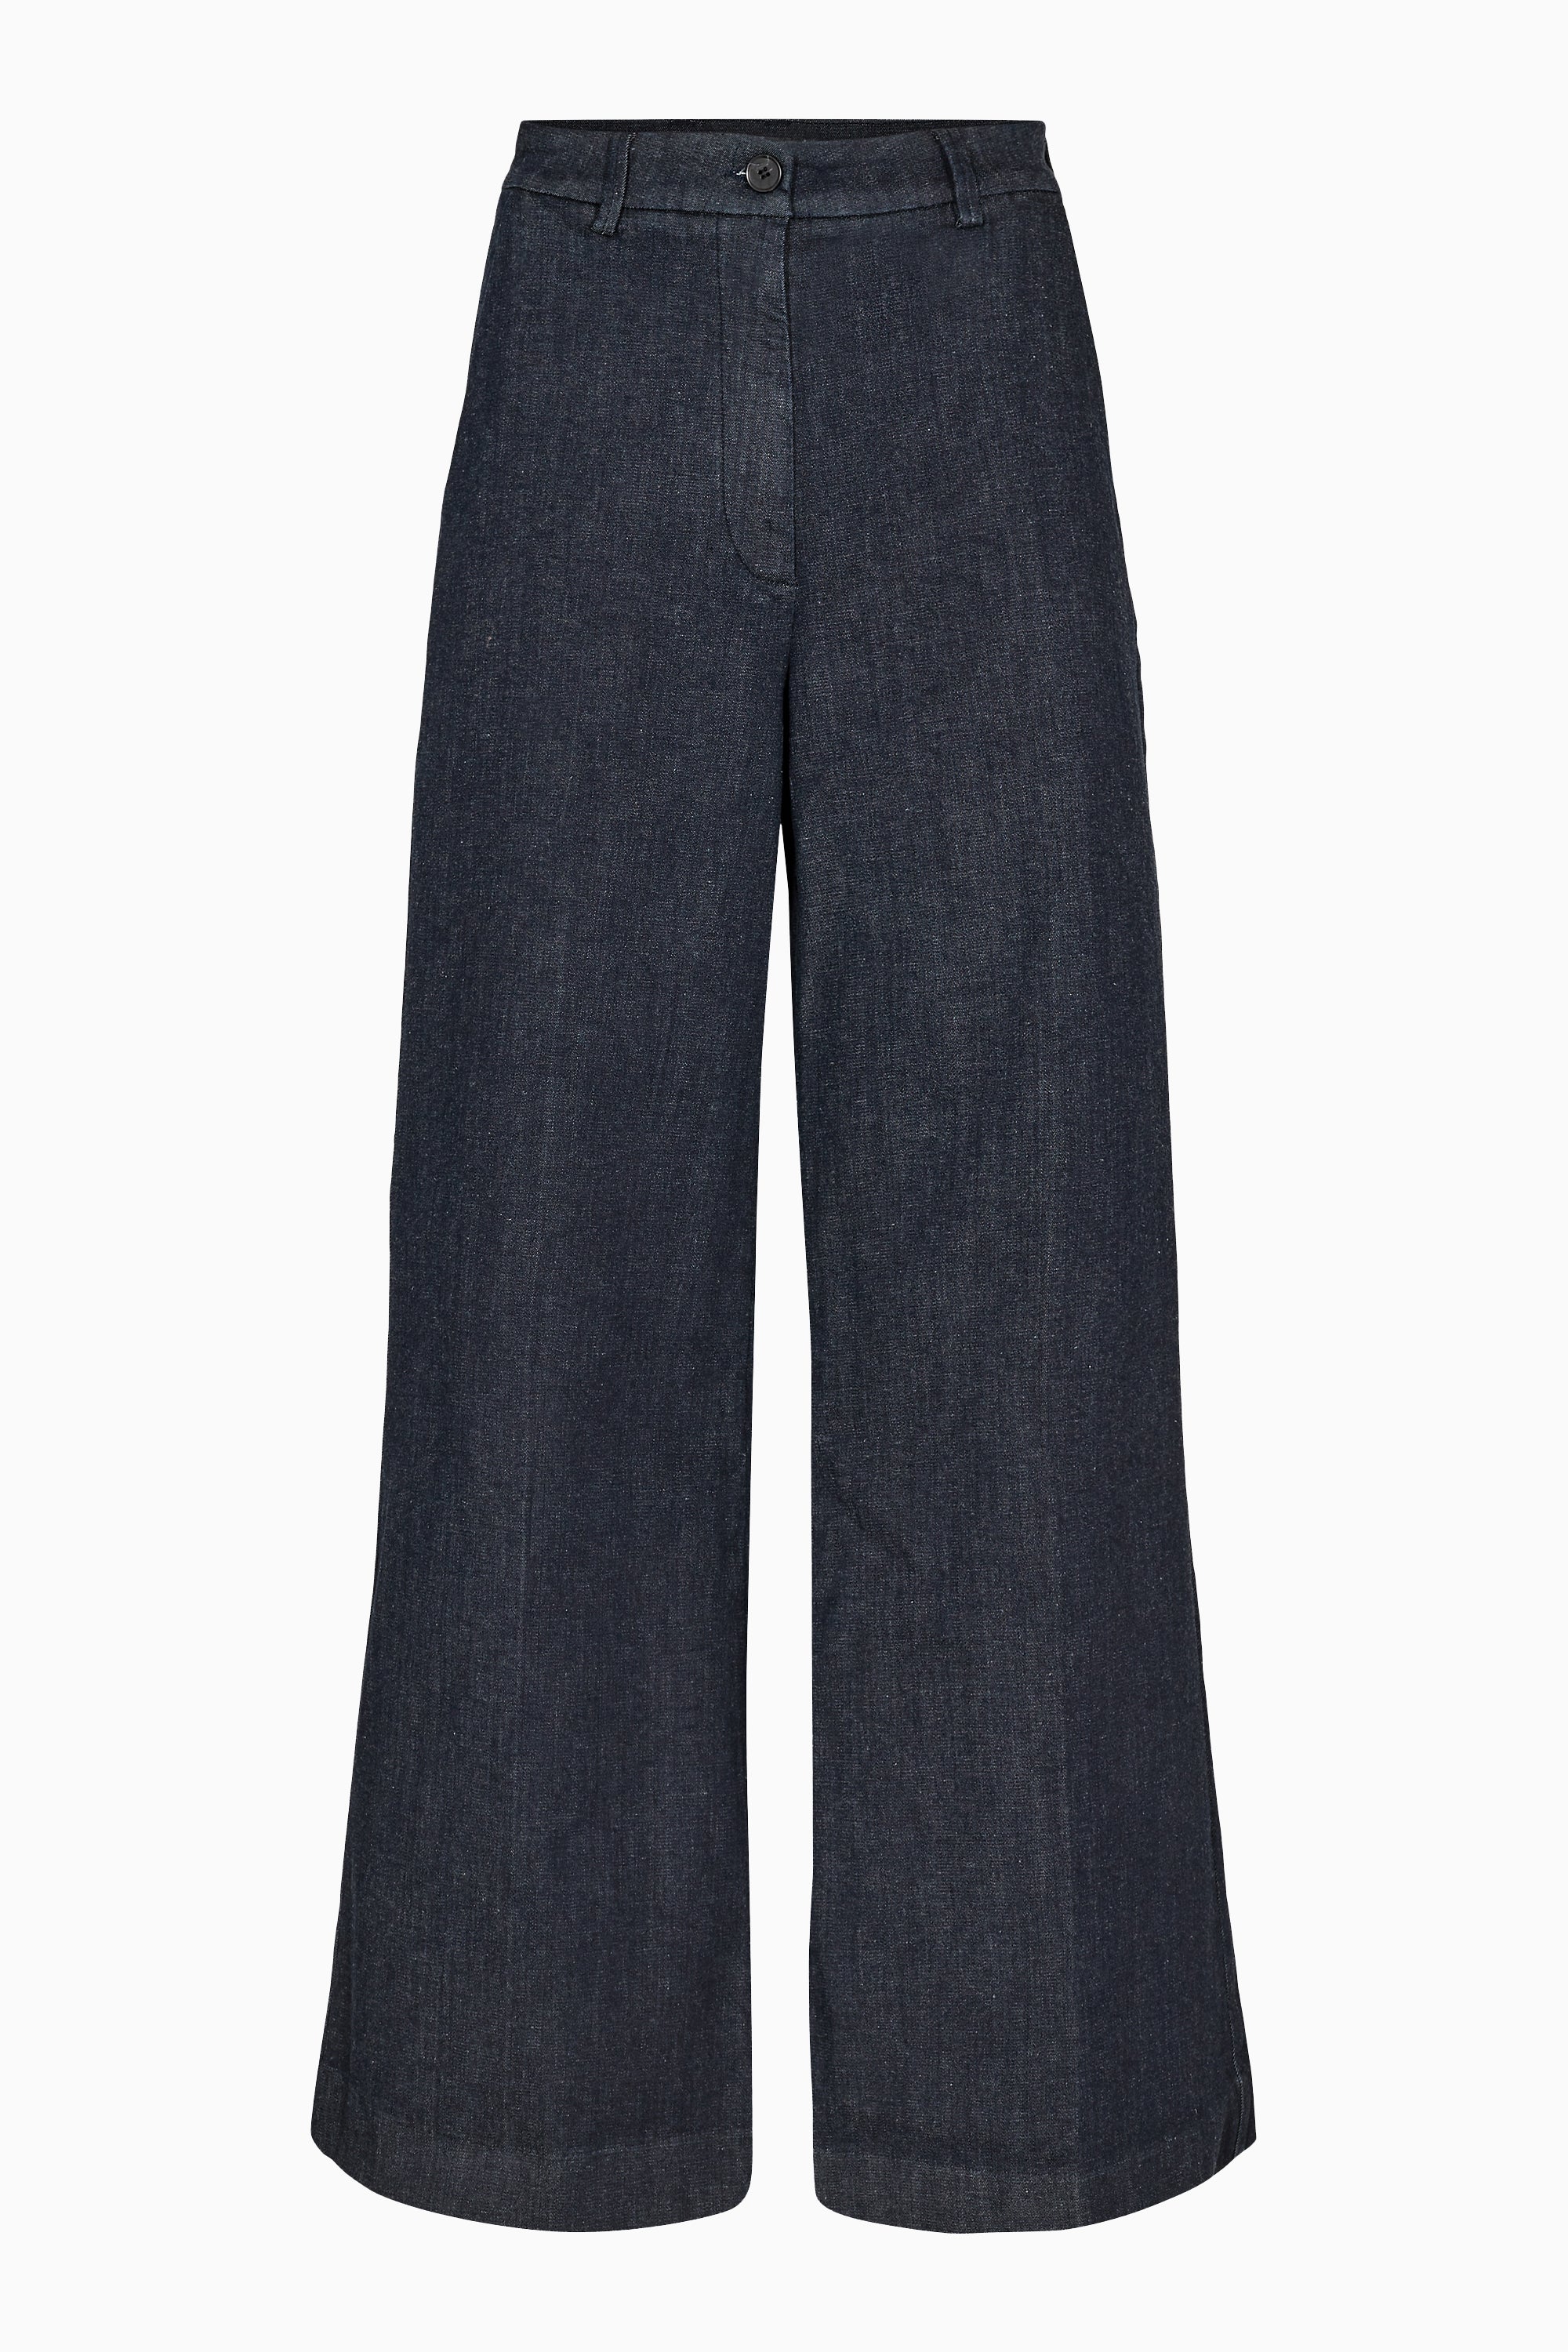 Kymaro, Jeans, Kymaro Curve Control Bootcut Jeans Size 222 Dark Wash  Stretch Blue Denim New